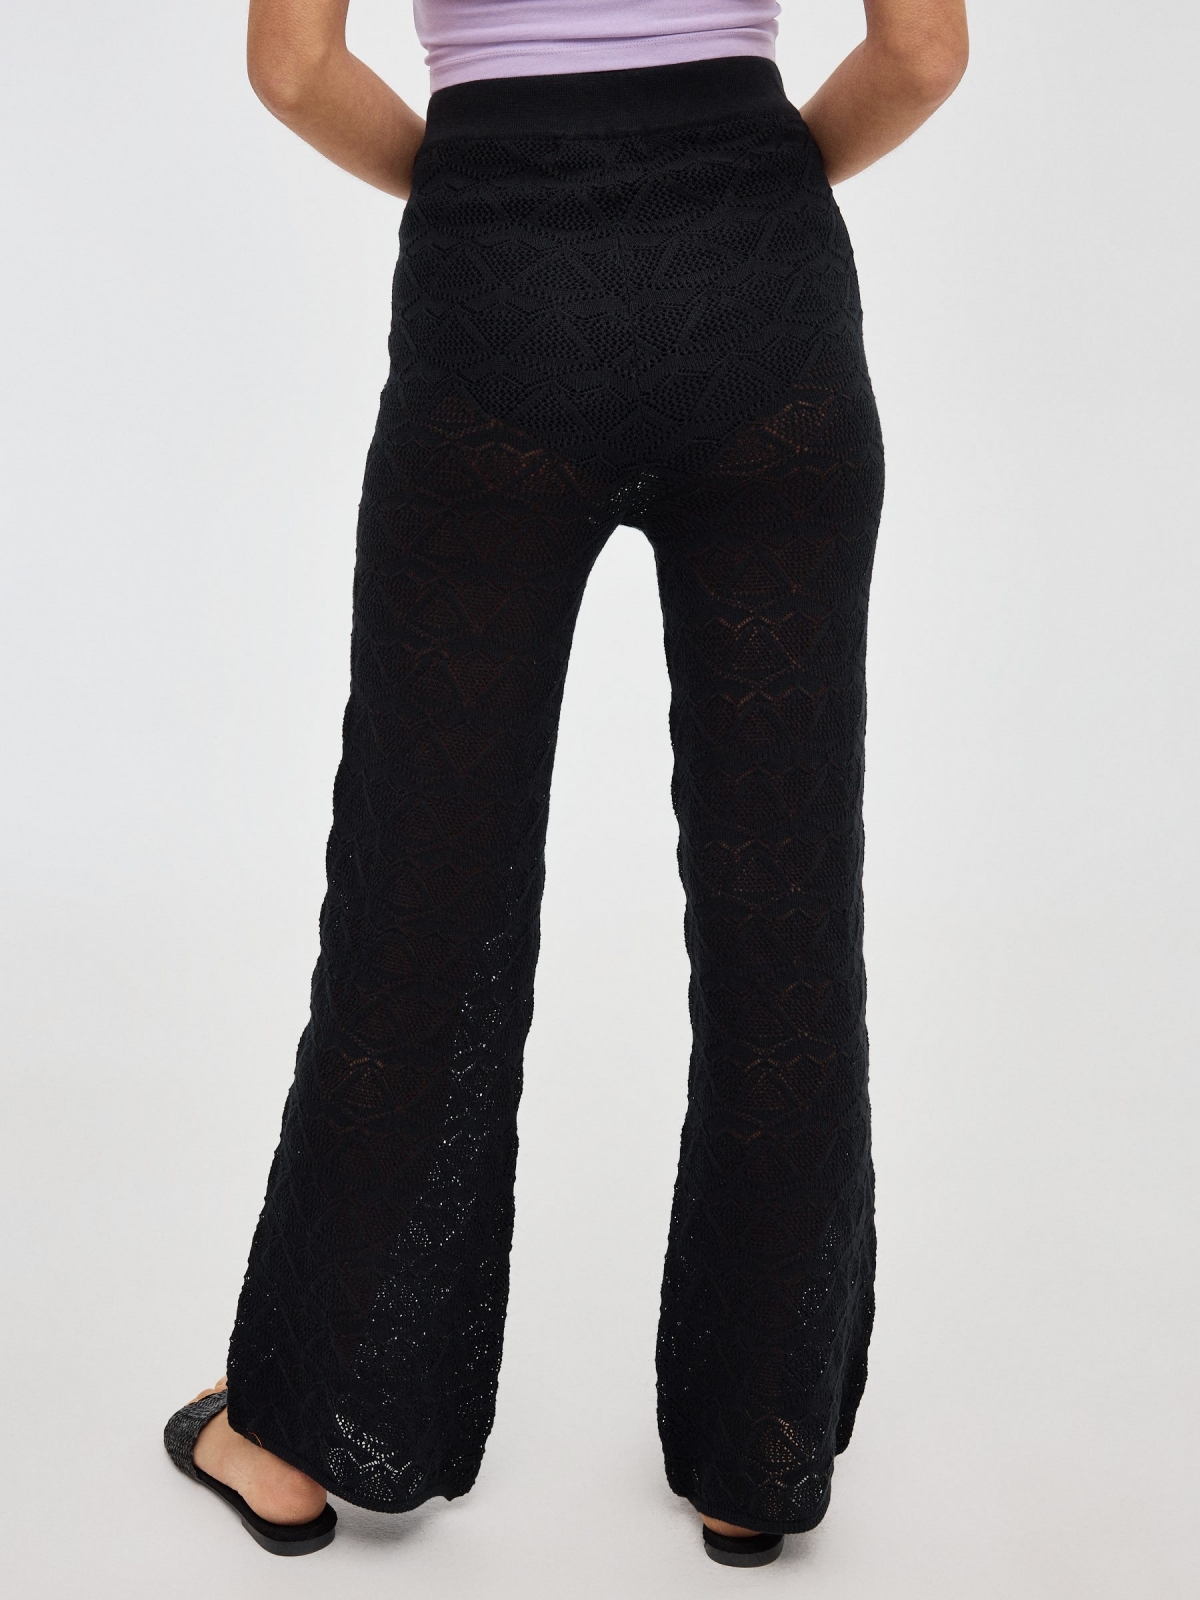 Crochet flare pants black middle back view